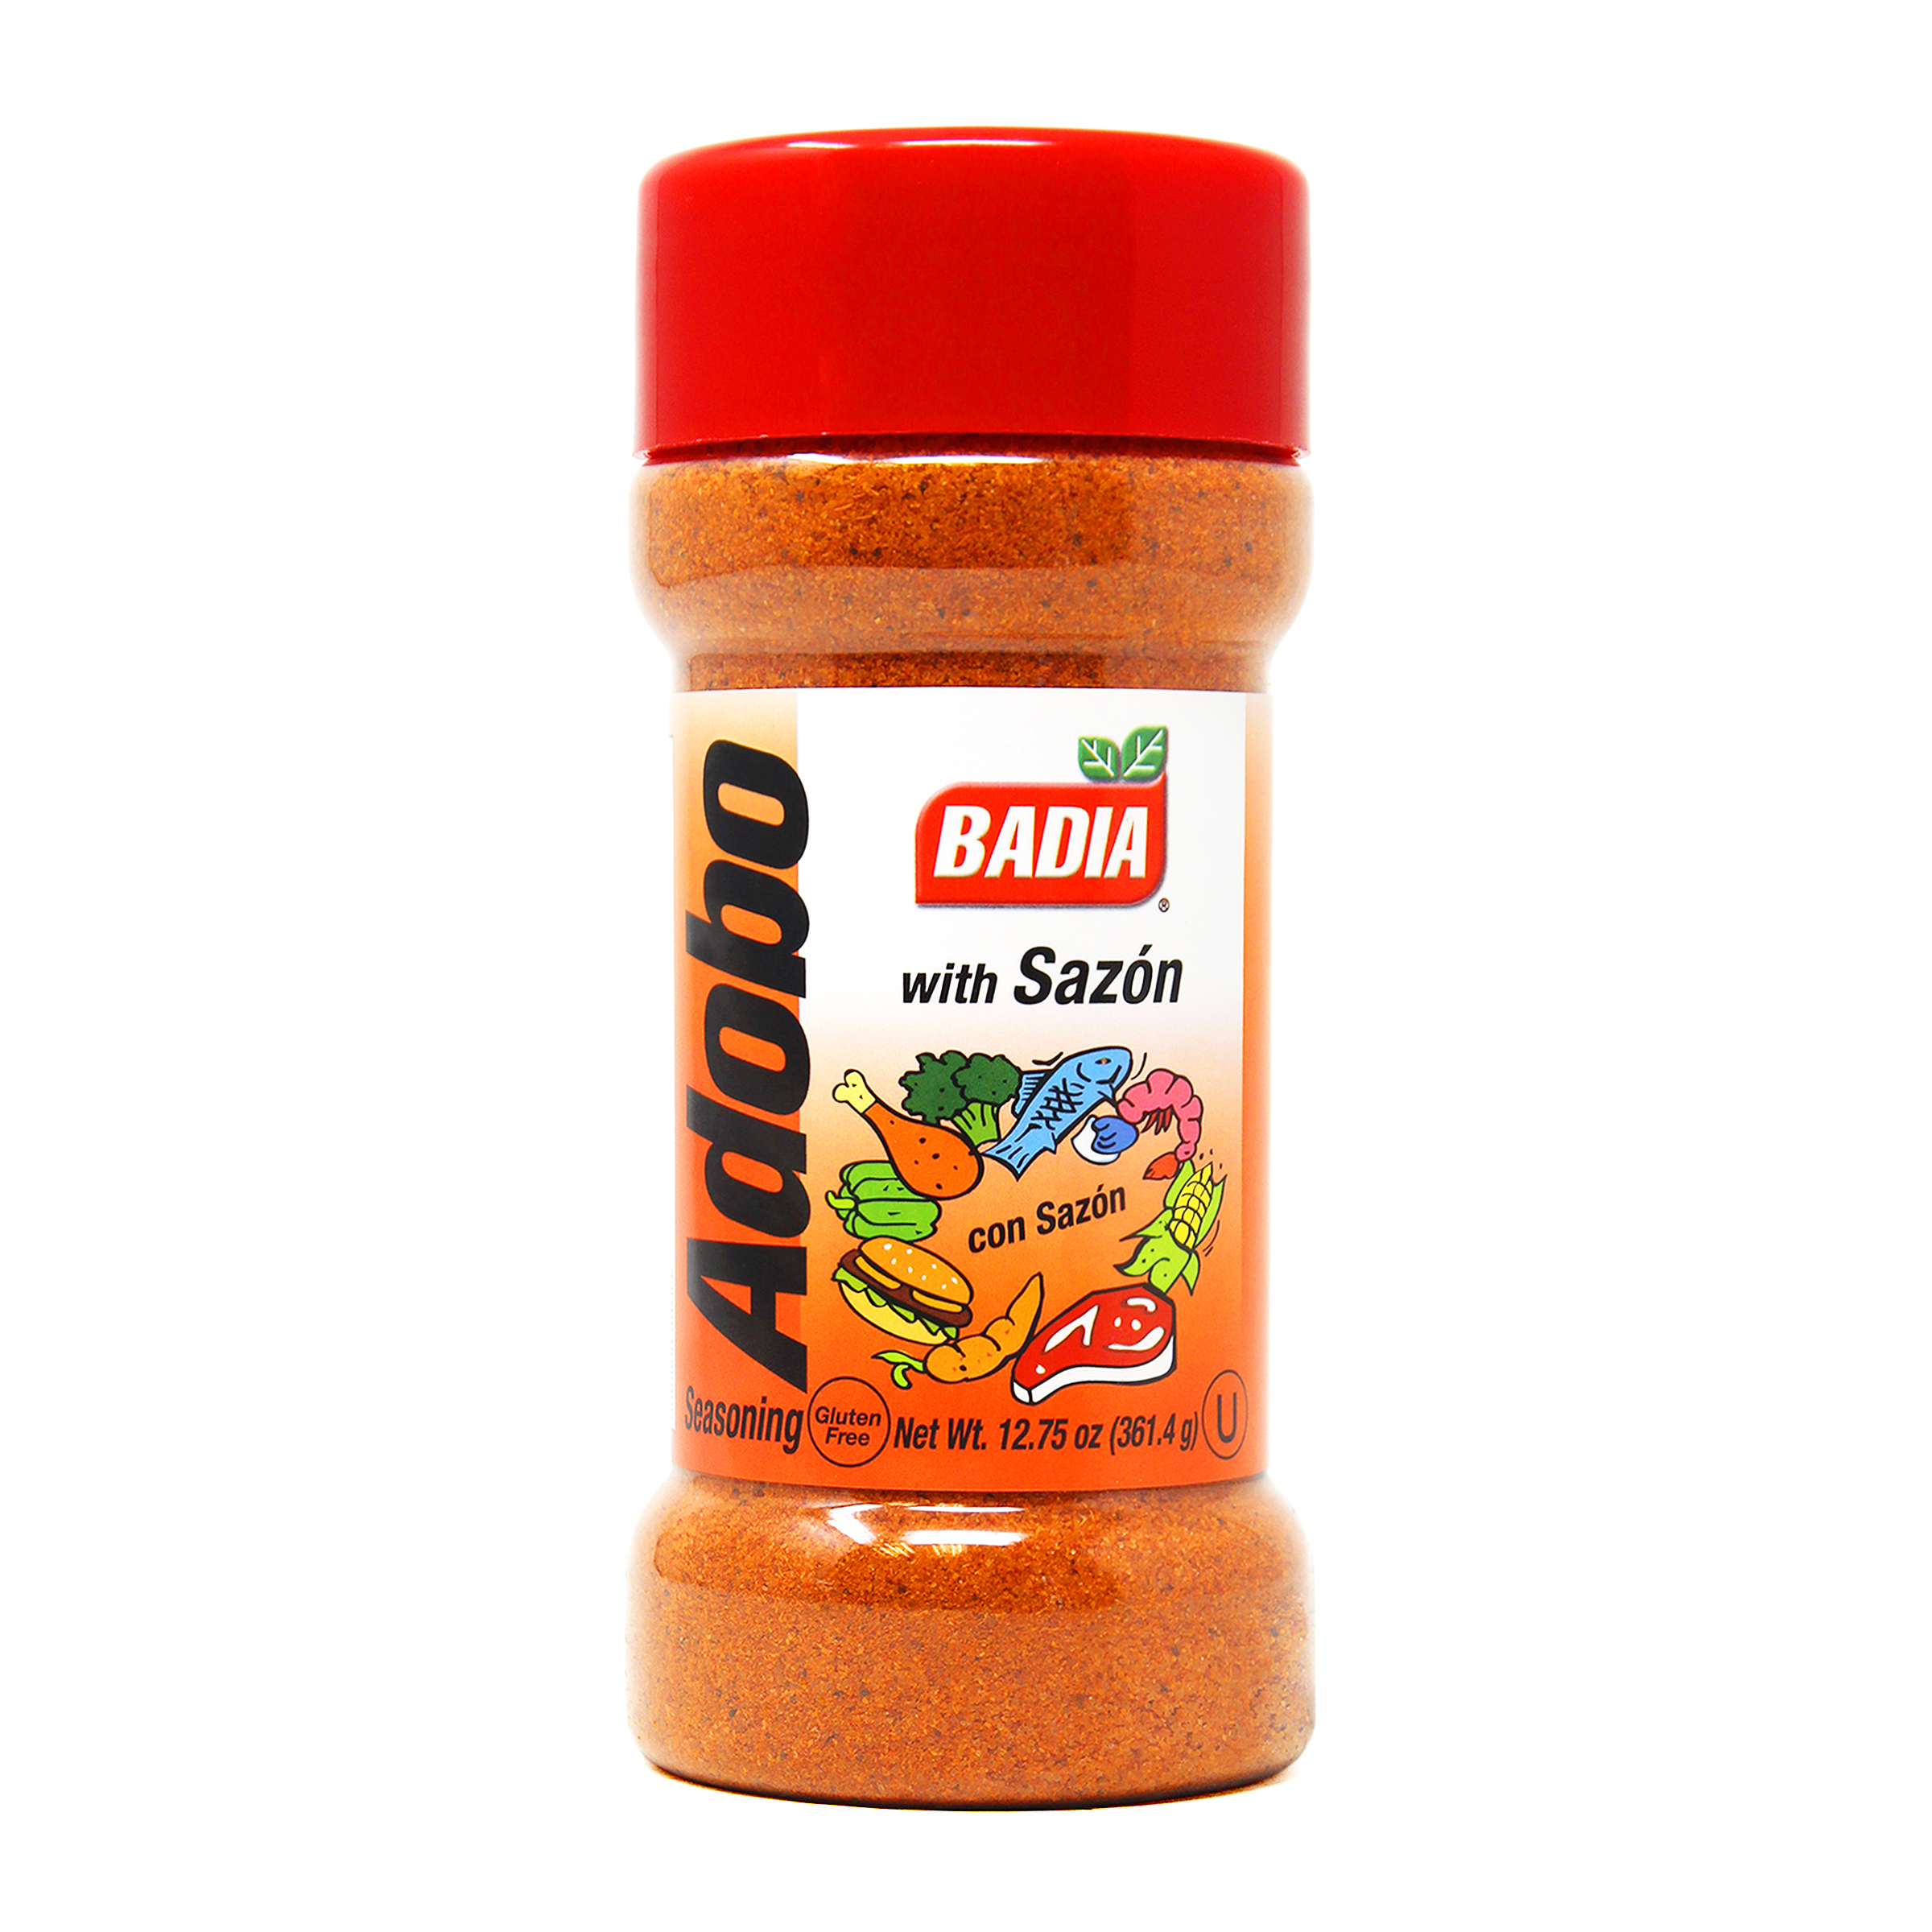 Complete Seasoning® - 9 oz - Badia Spices